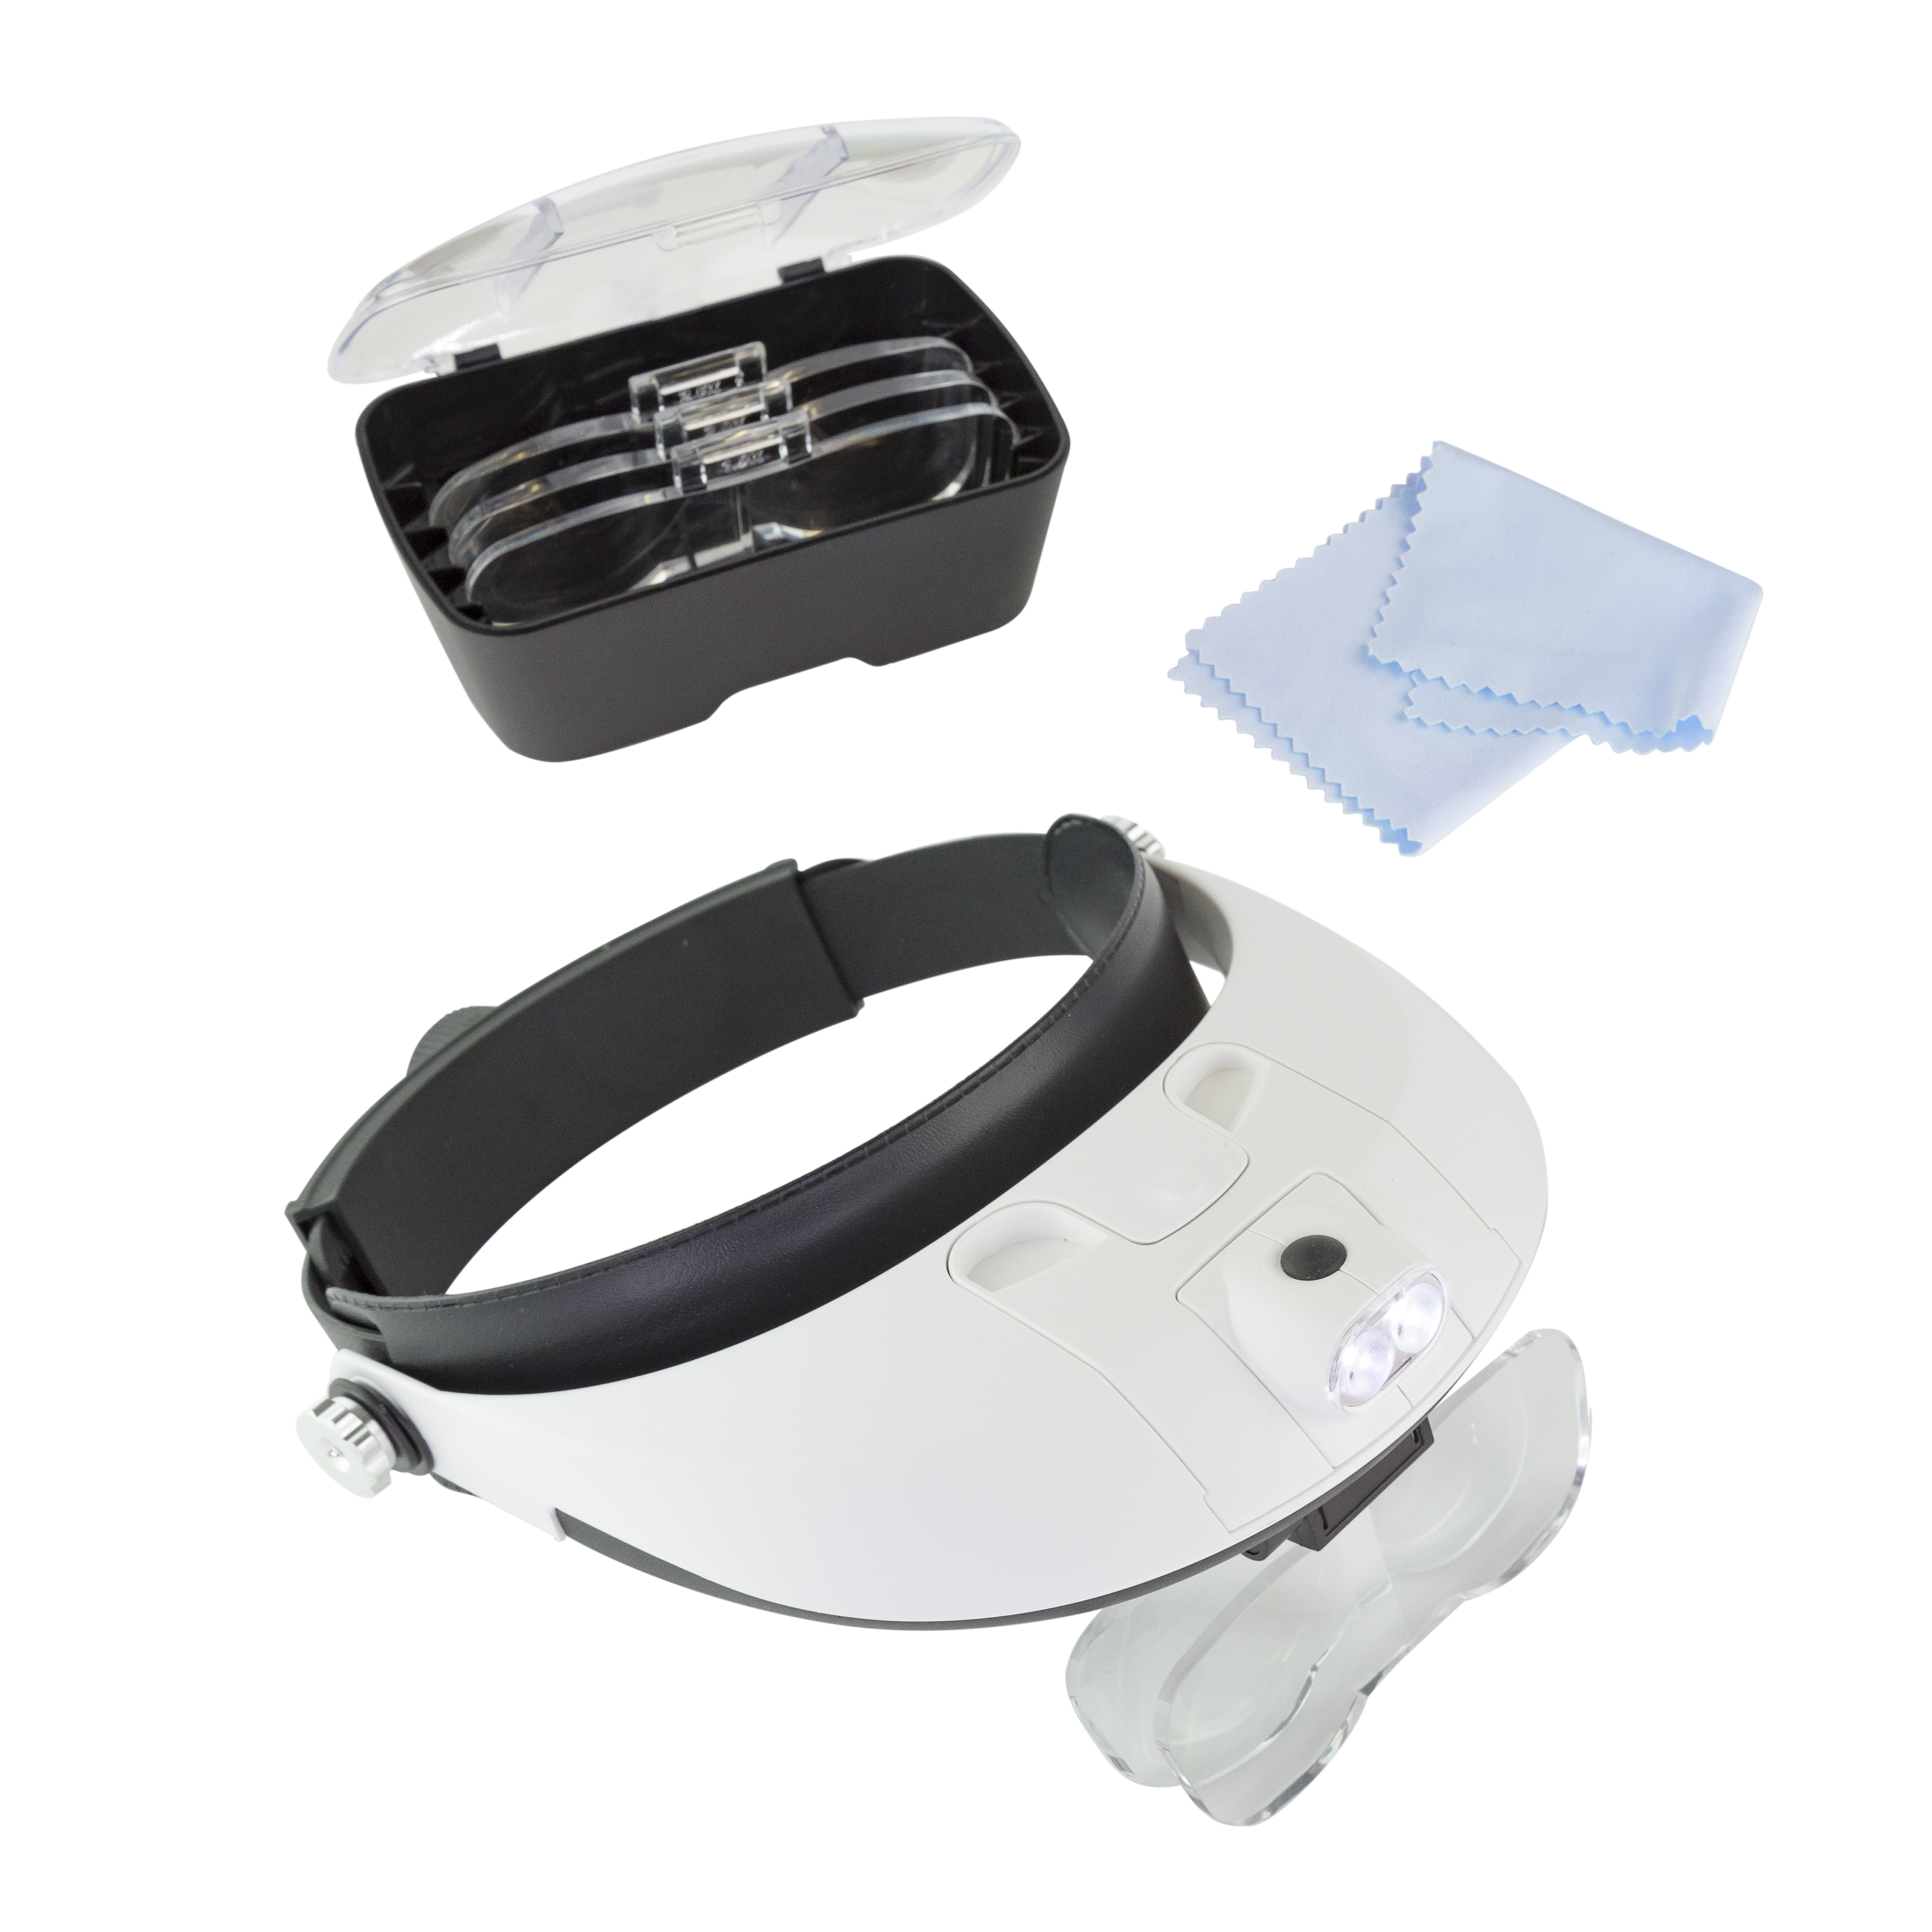 Lightcraft Pro LED Headband Magnifier Kit - CLUB EXCLUSIVE